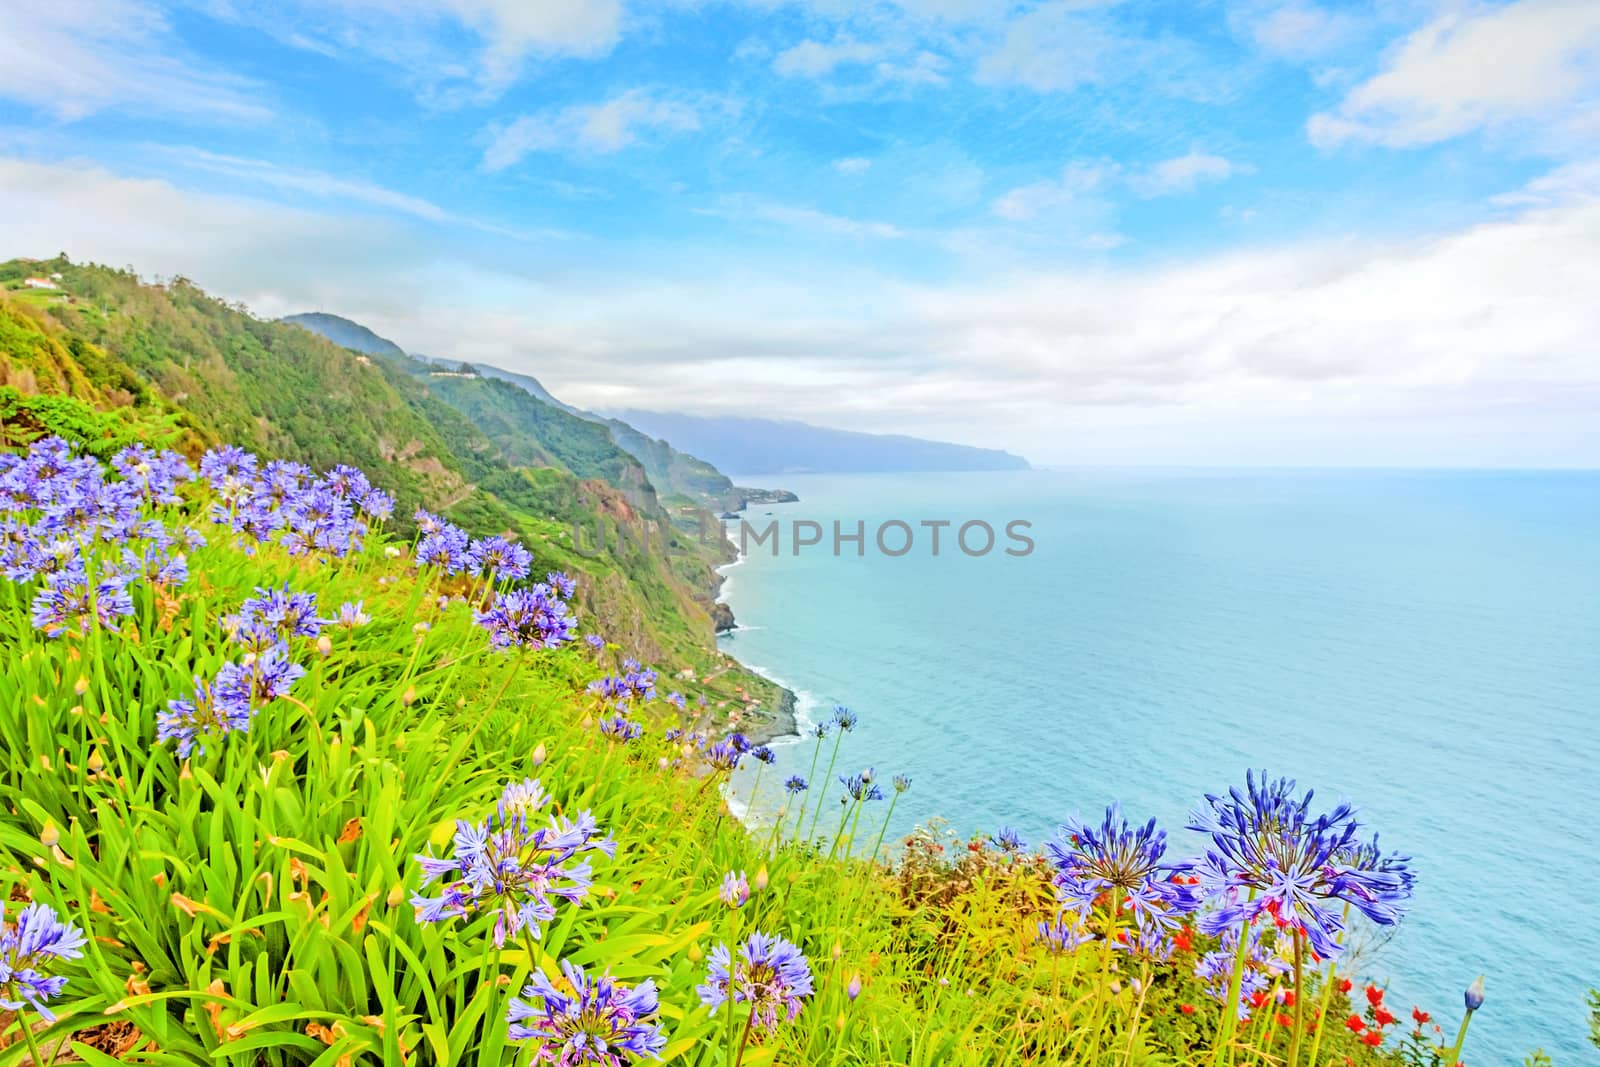 View of beautiful mountains and ocean on northern coast near Sao Jorge, Madeira island, Portugal